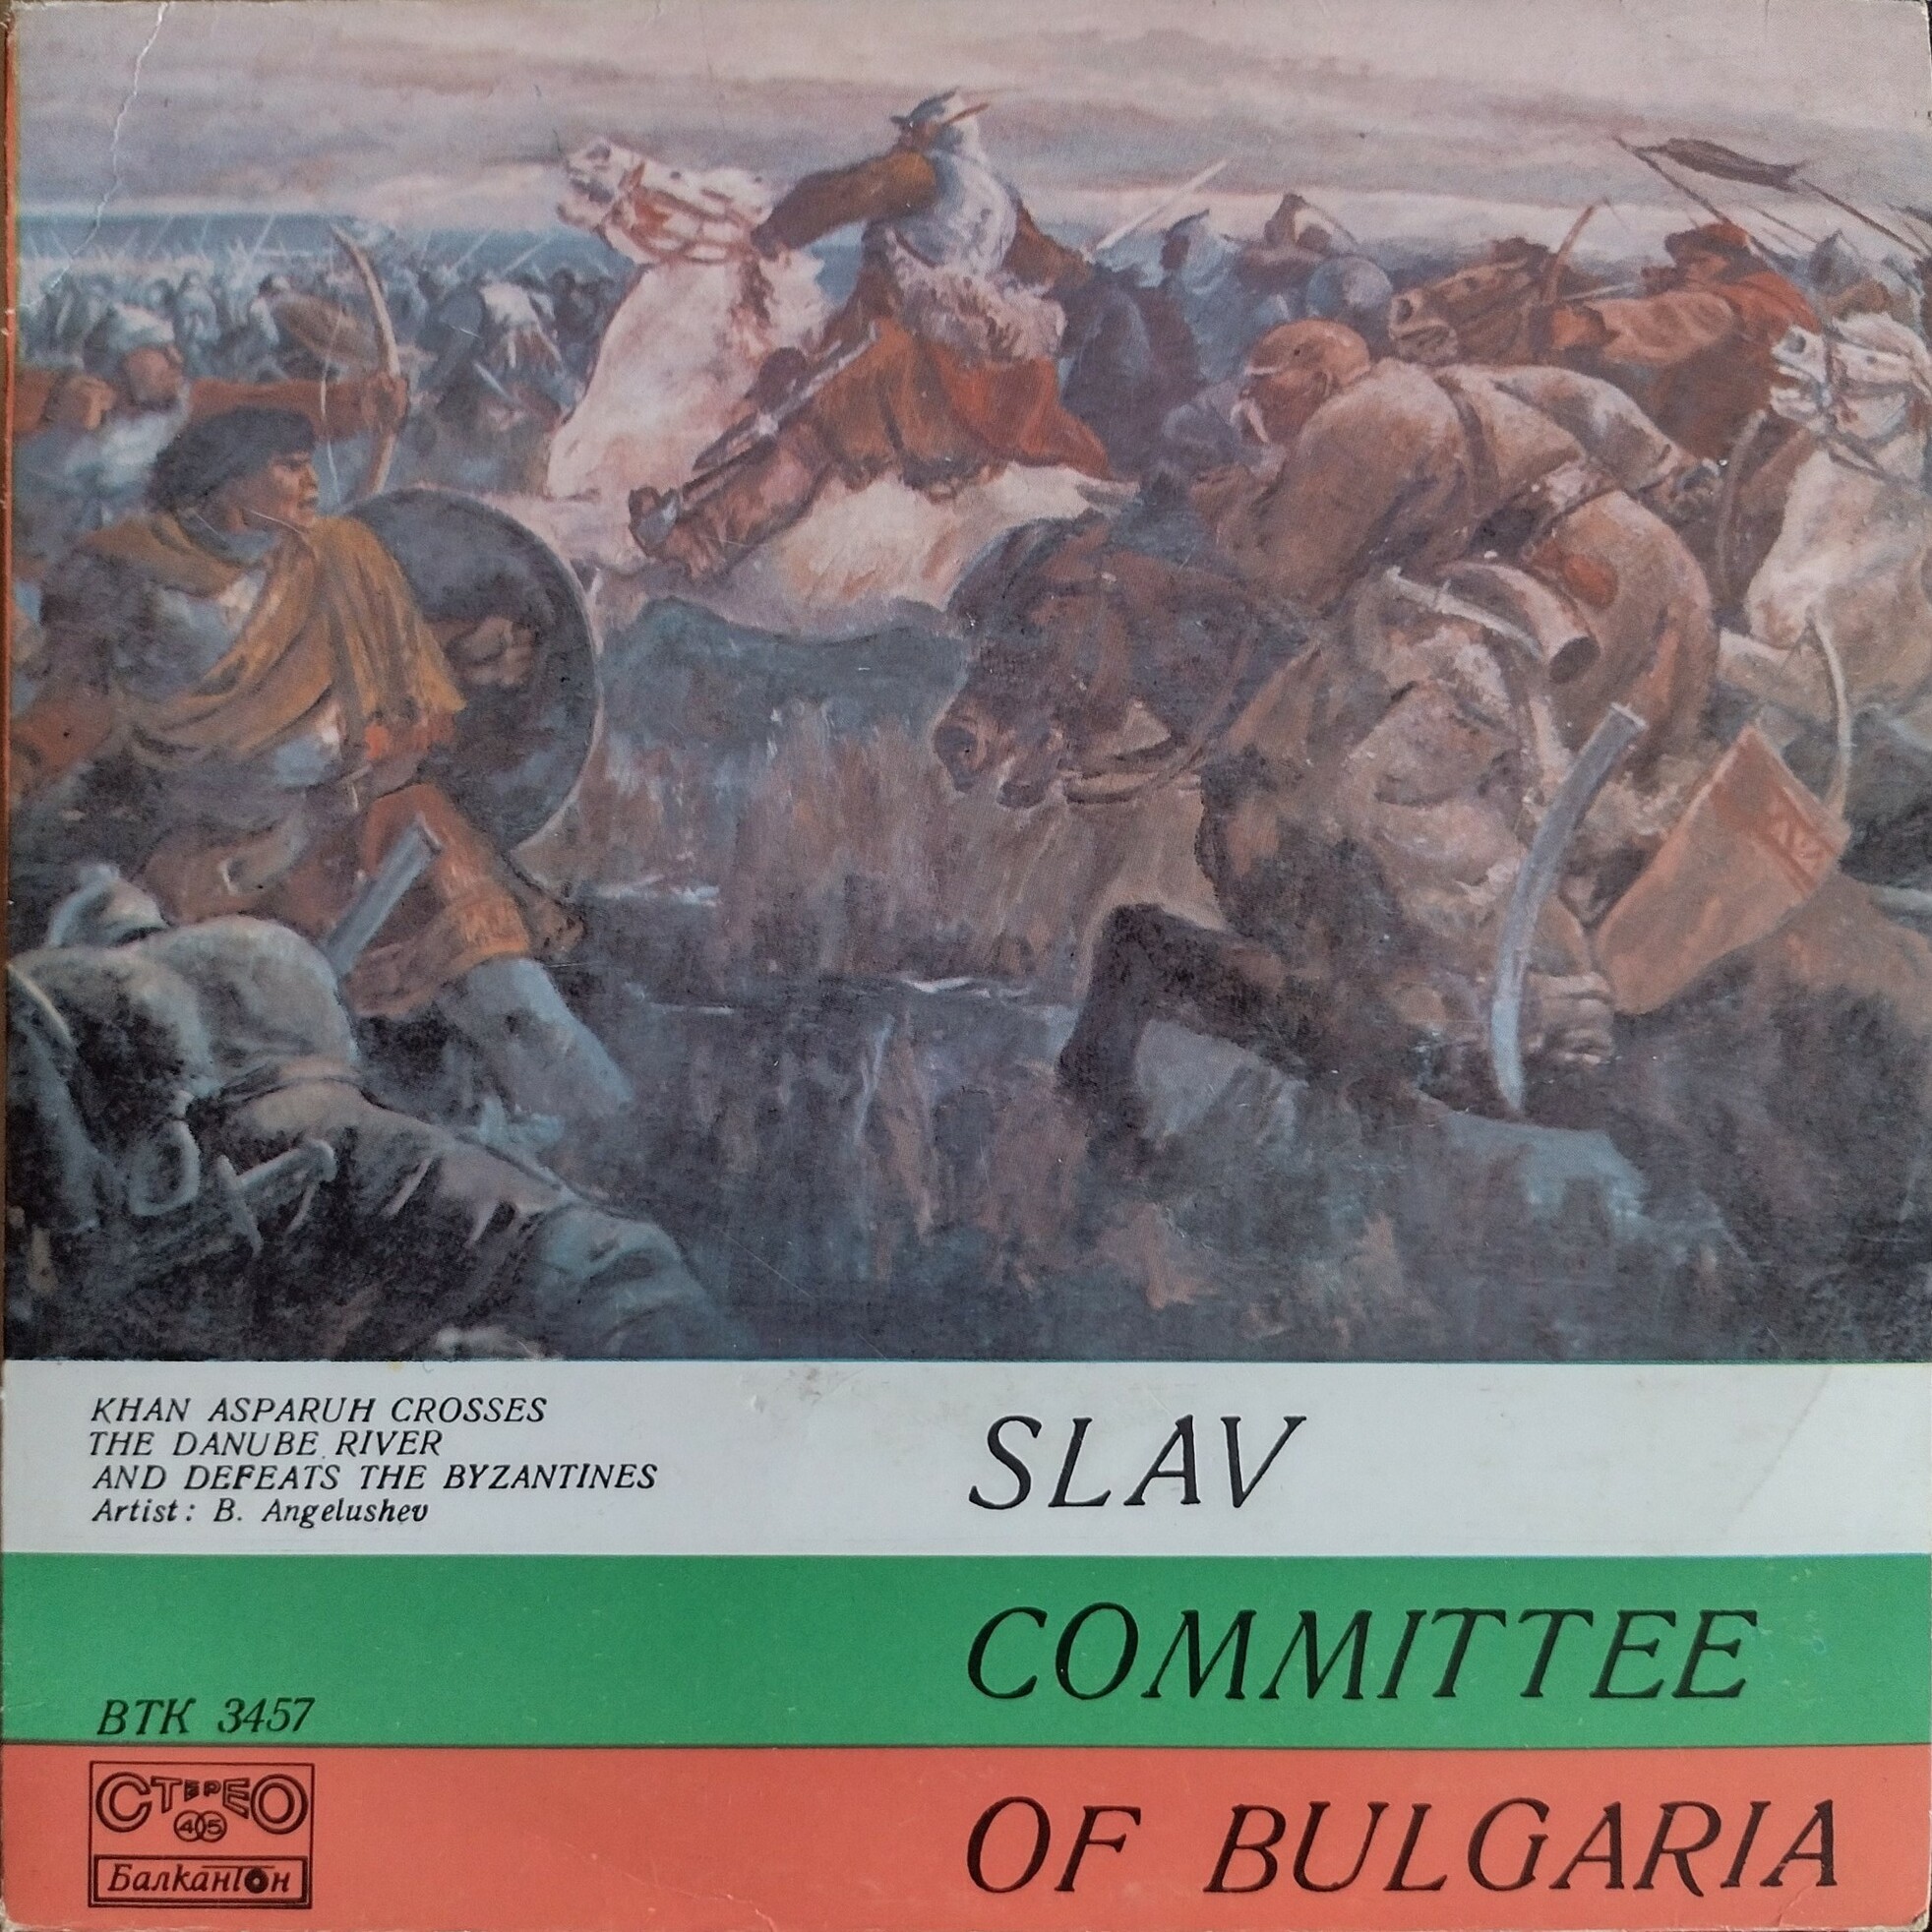 Slav committee of Bulgaria